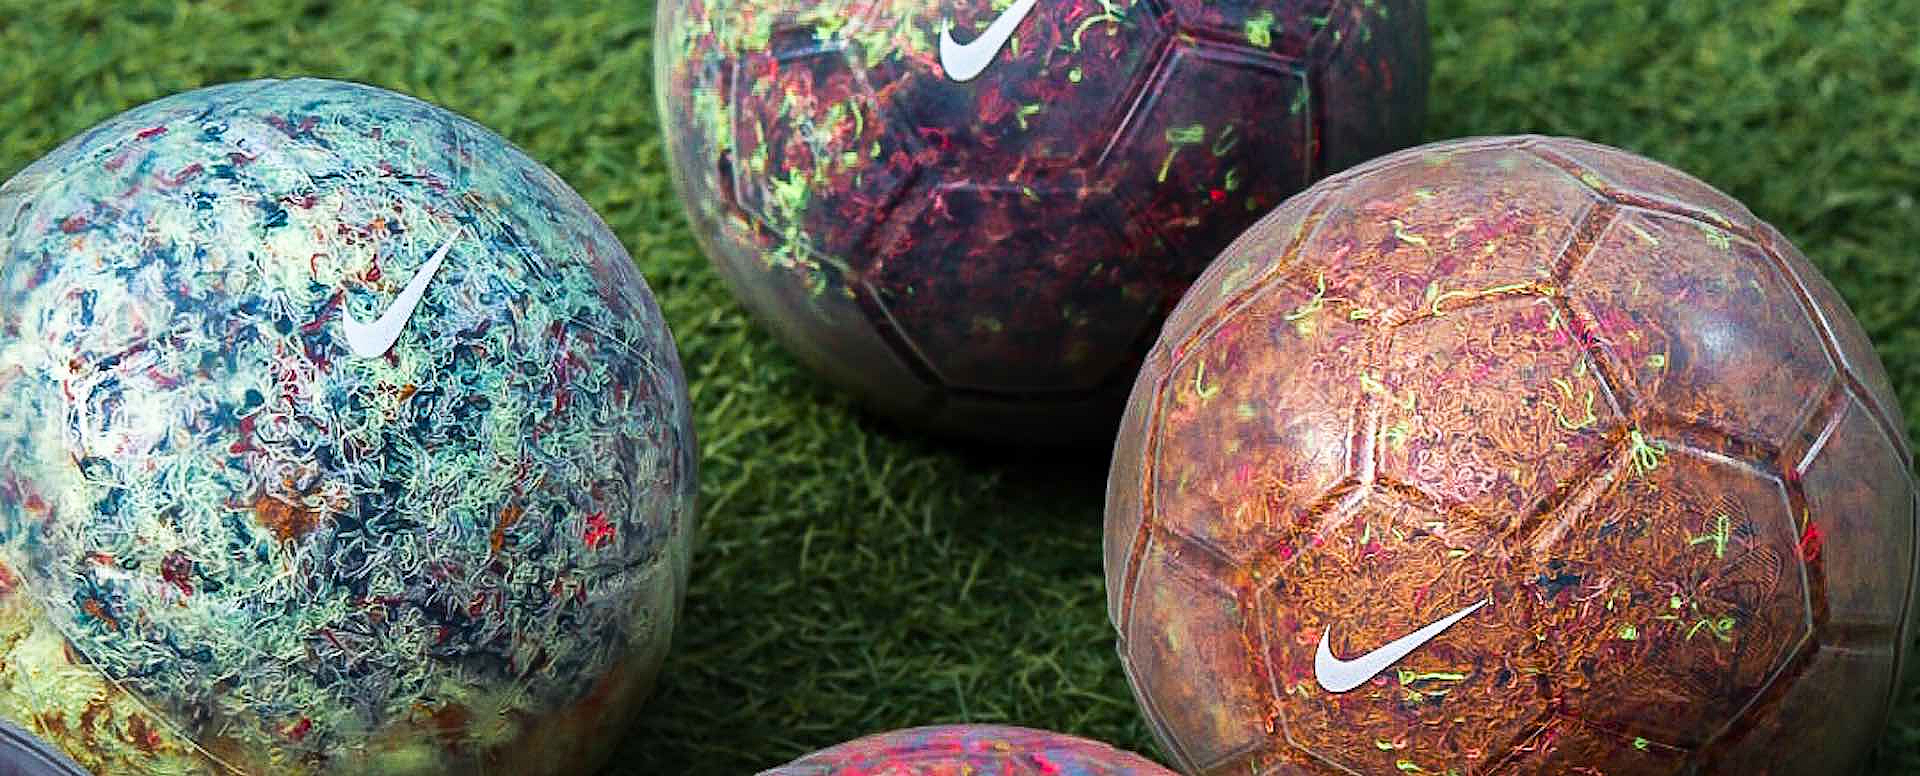 PUMA Performance ENERGY Soccer Ball